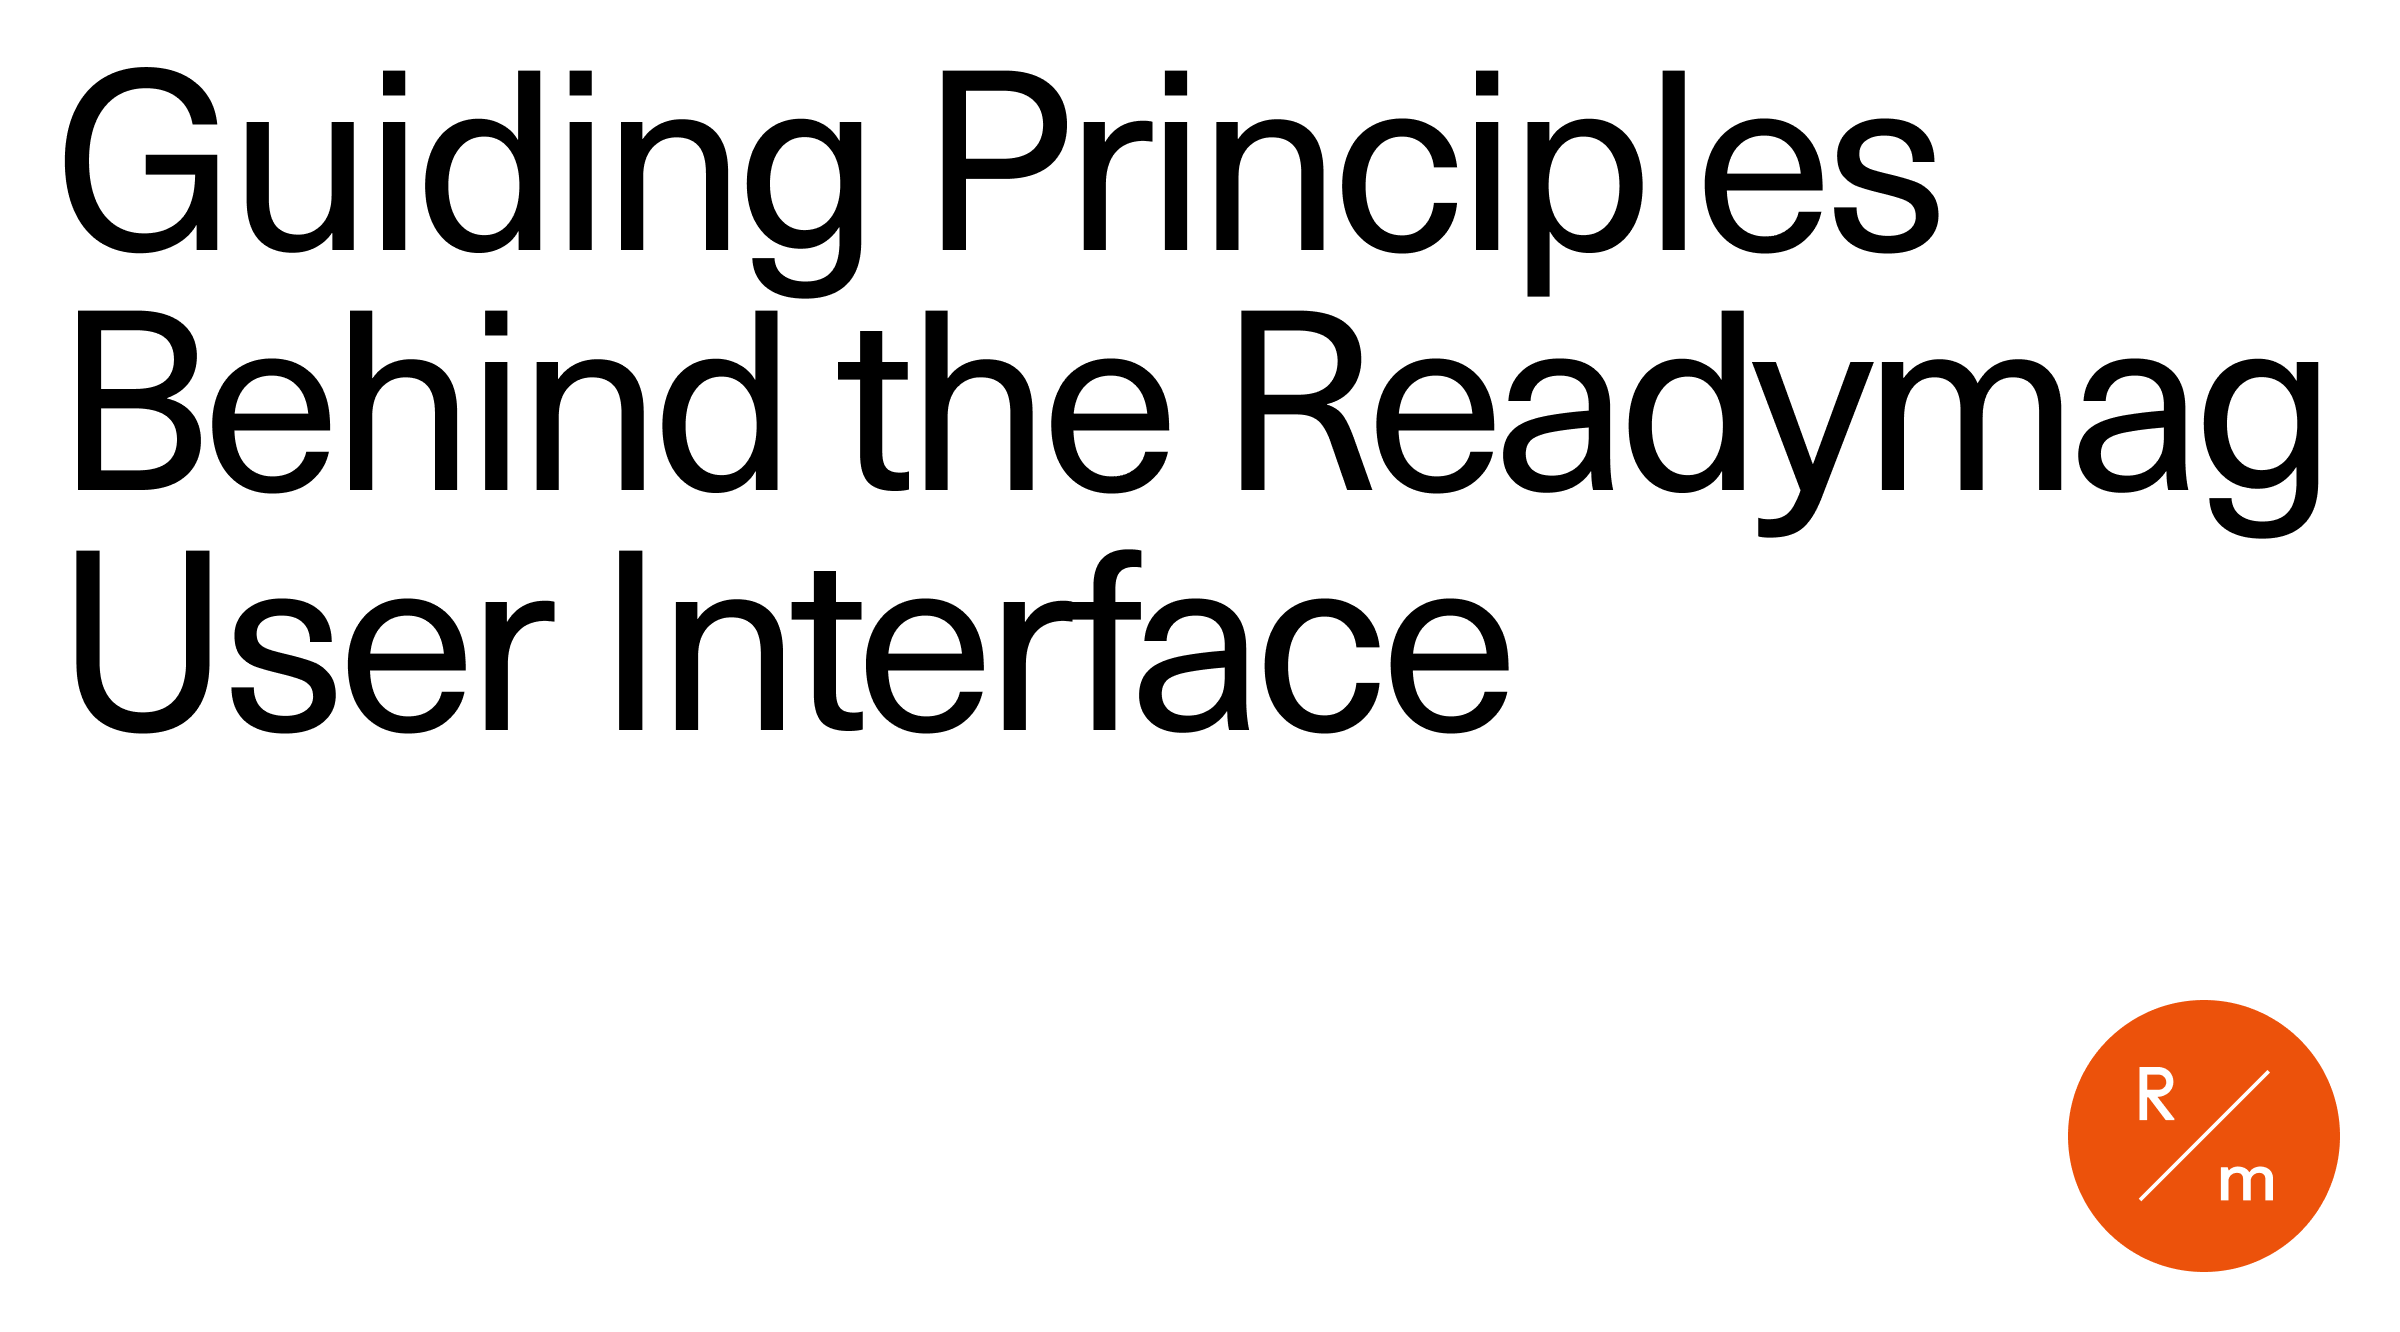 Guiding principles behind the Readymag user interface